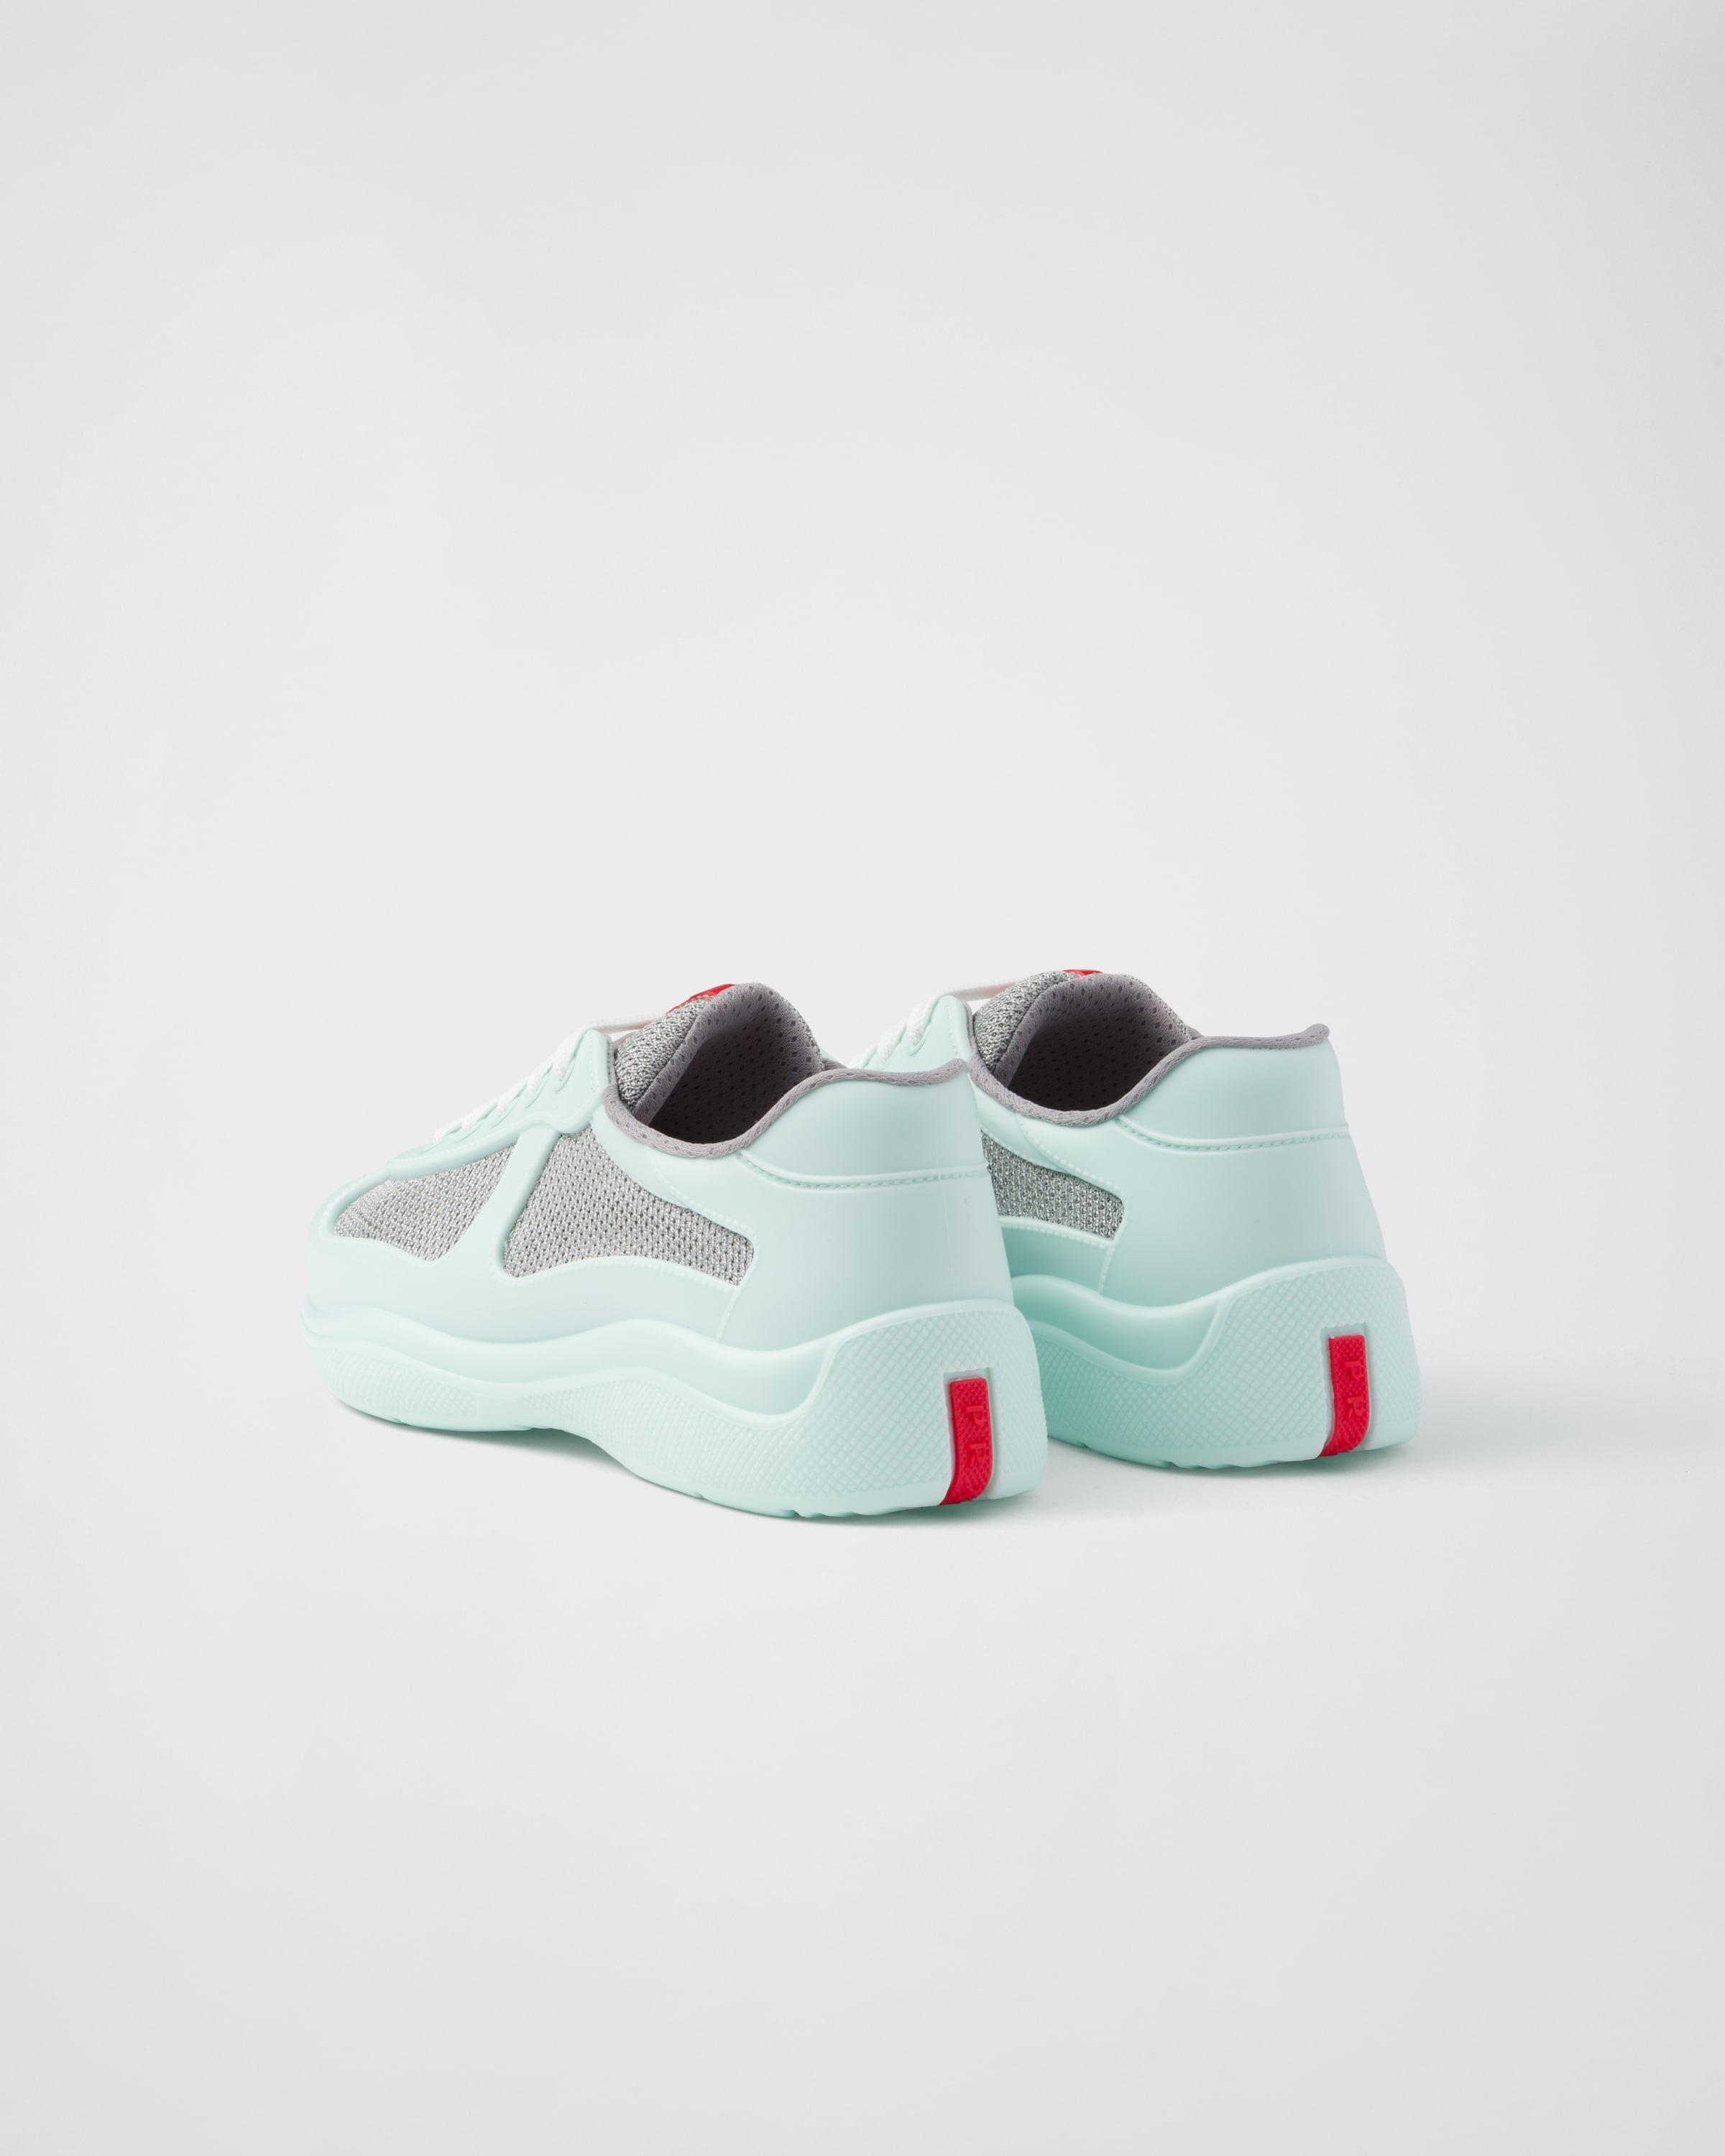 Prada America's Cup Soft rubber and bike fabric sneakers - 4